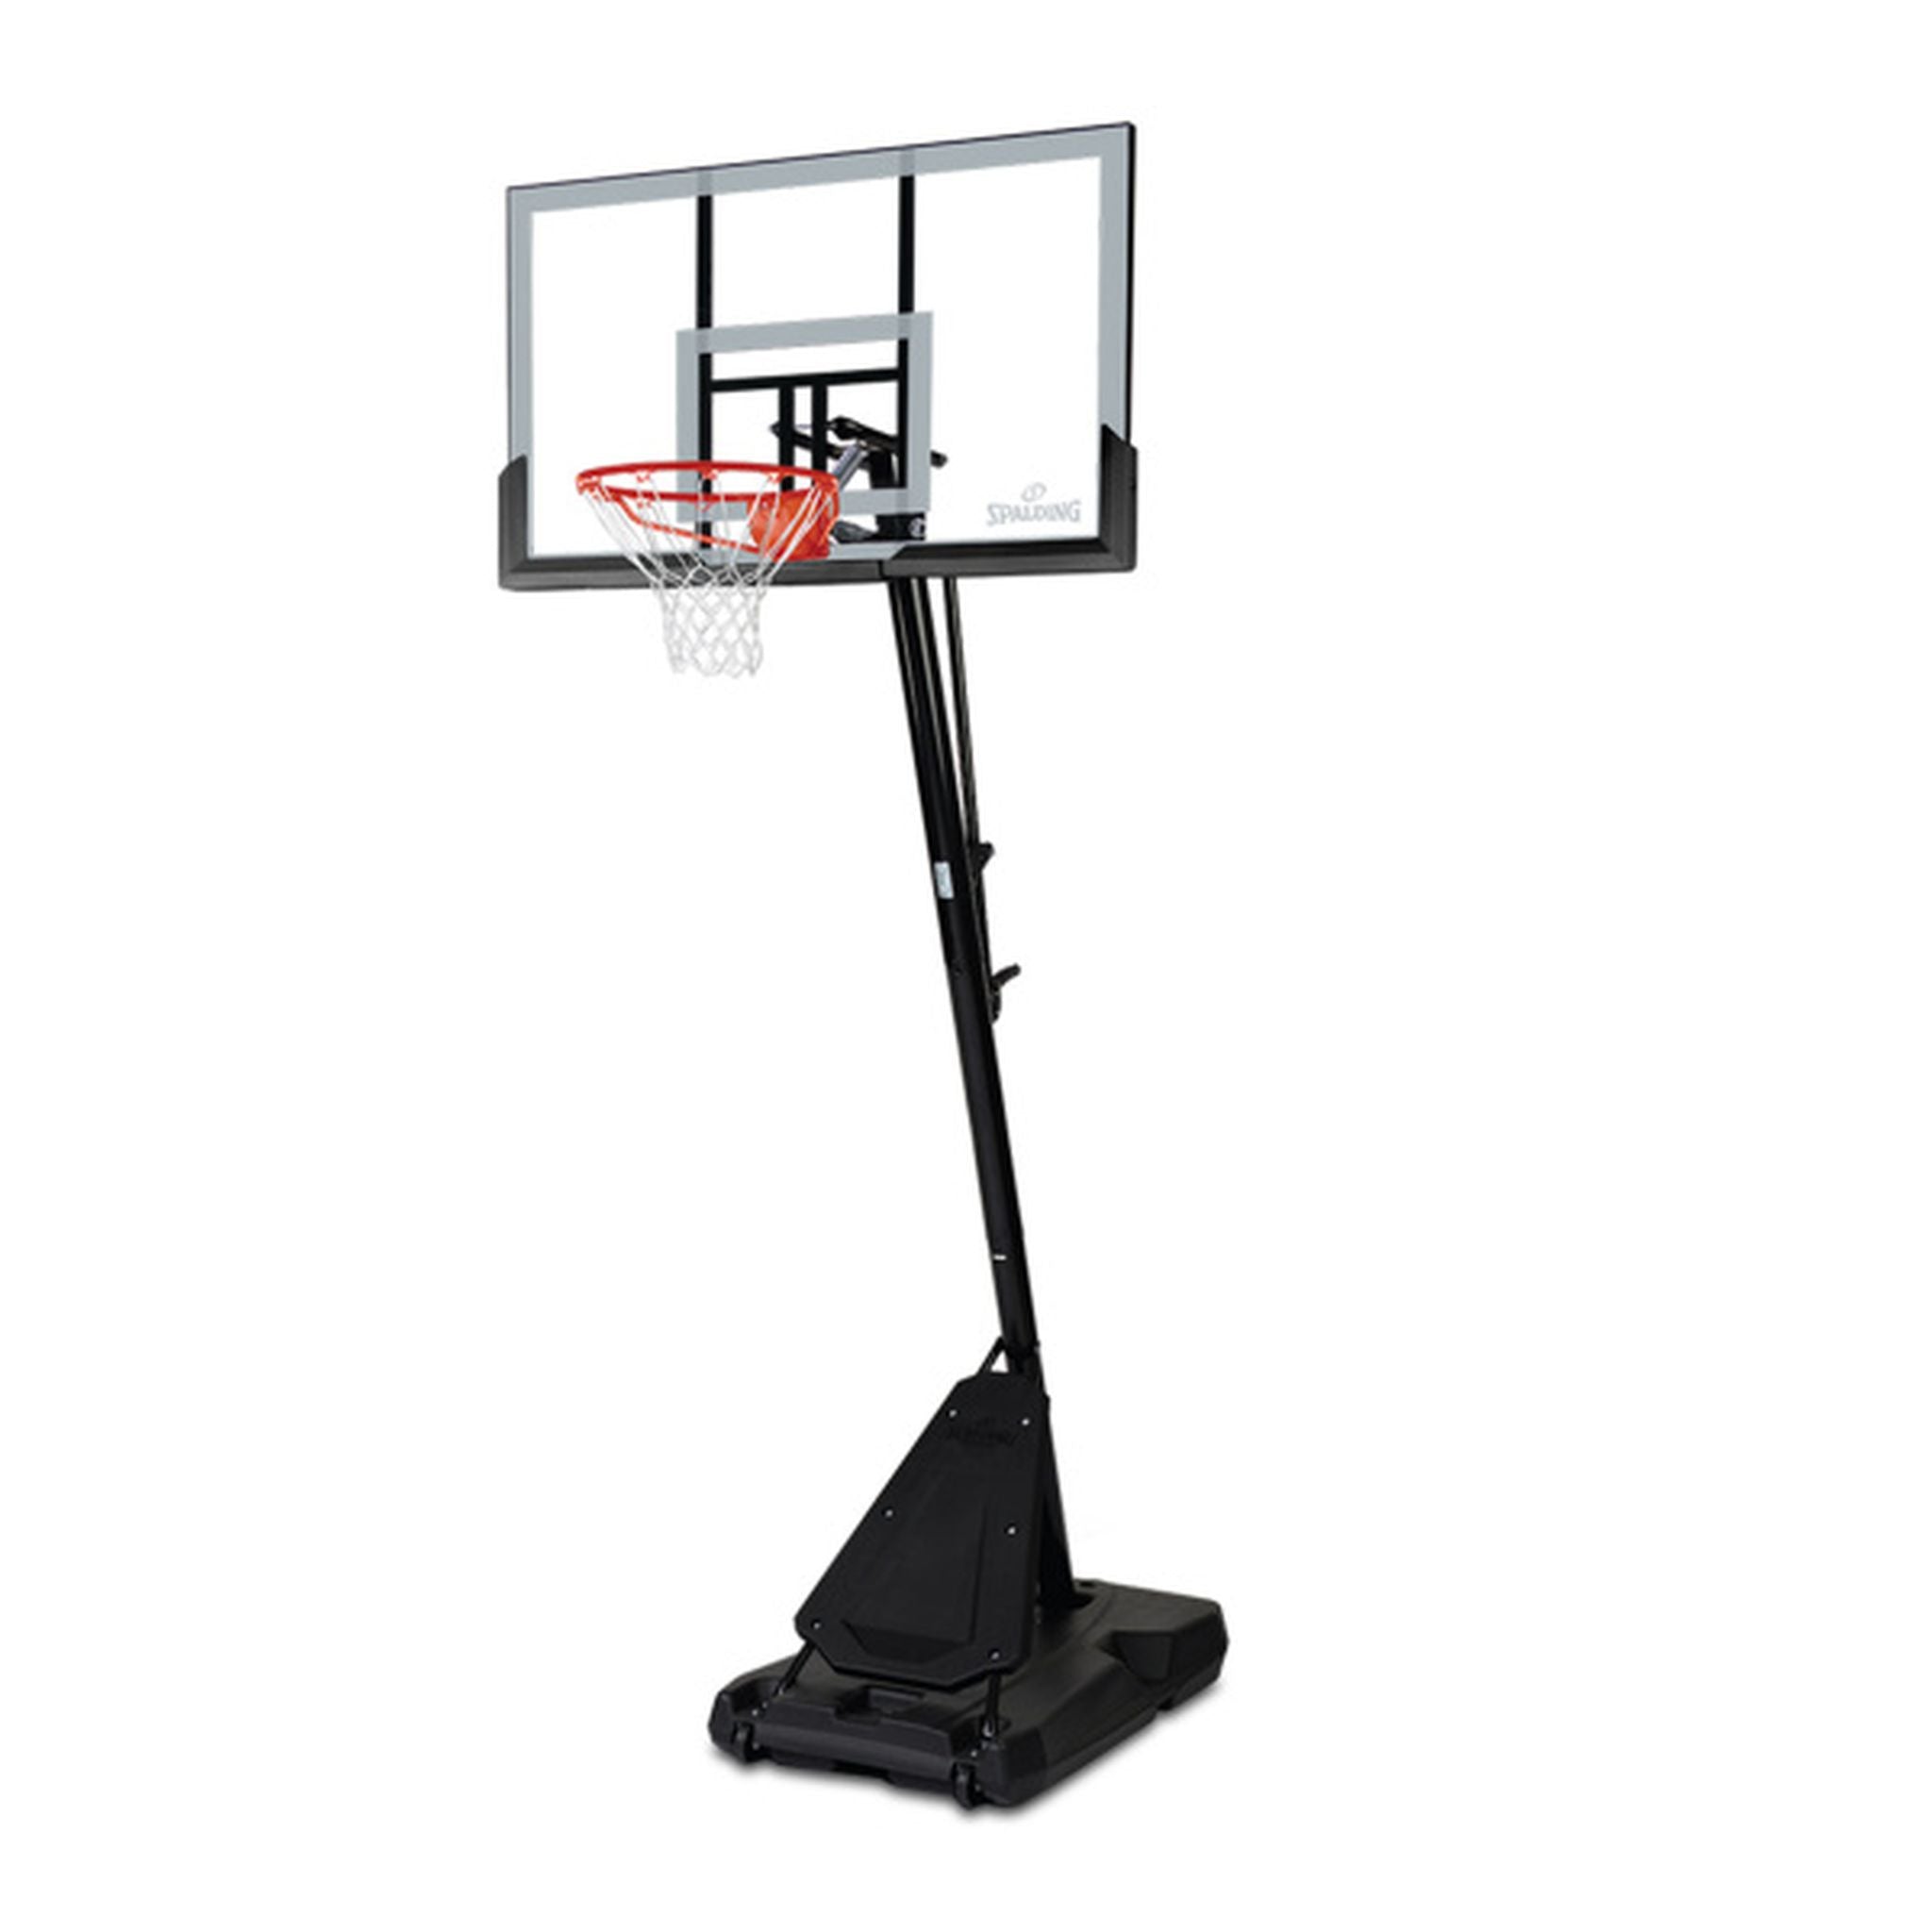 Spalding 54-inch Exacta Acrylic Portable Basketball System